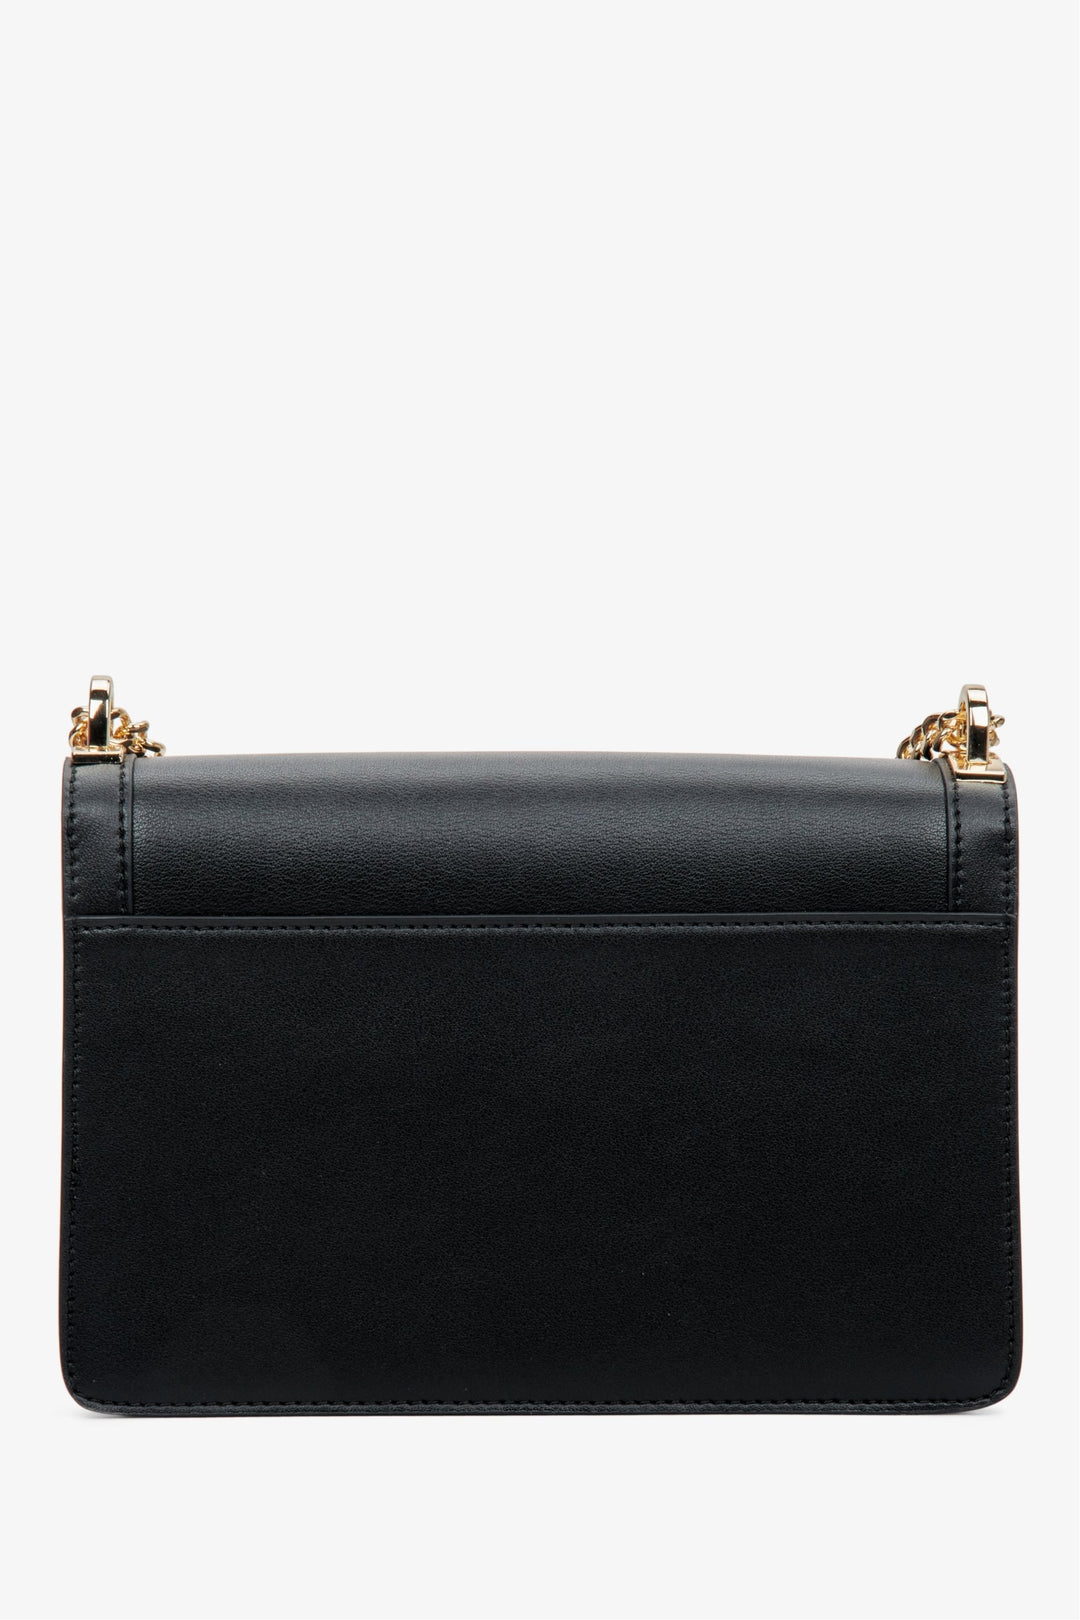 Women's leather black handbag with a golden chain, Estro - reverse side.